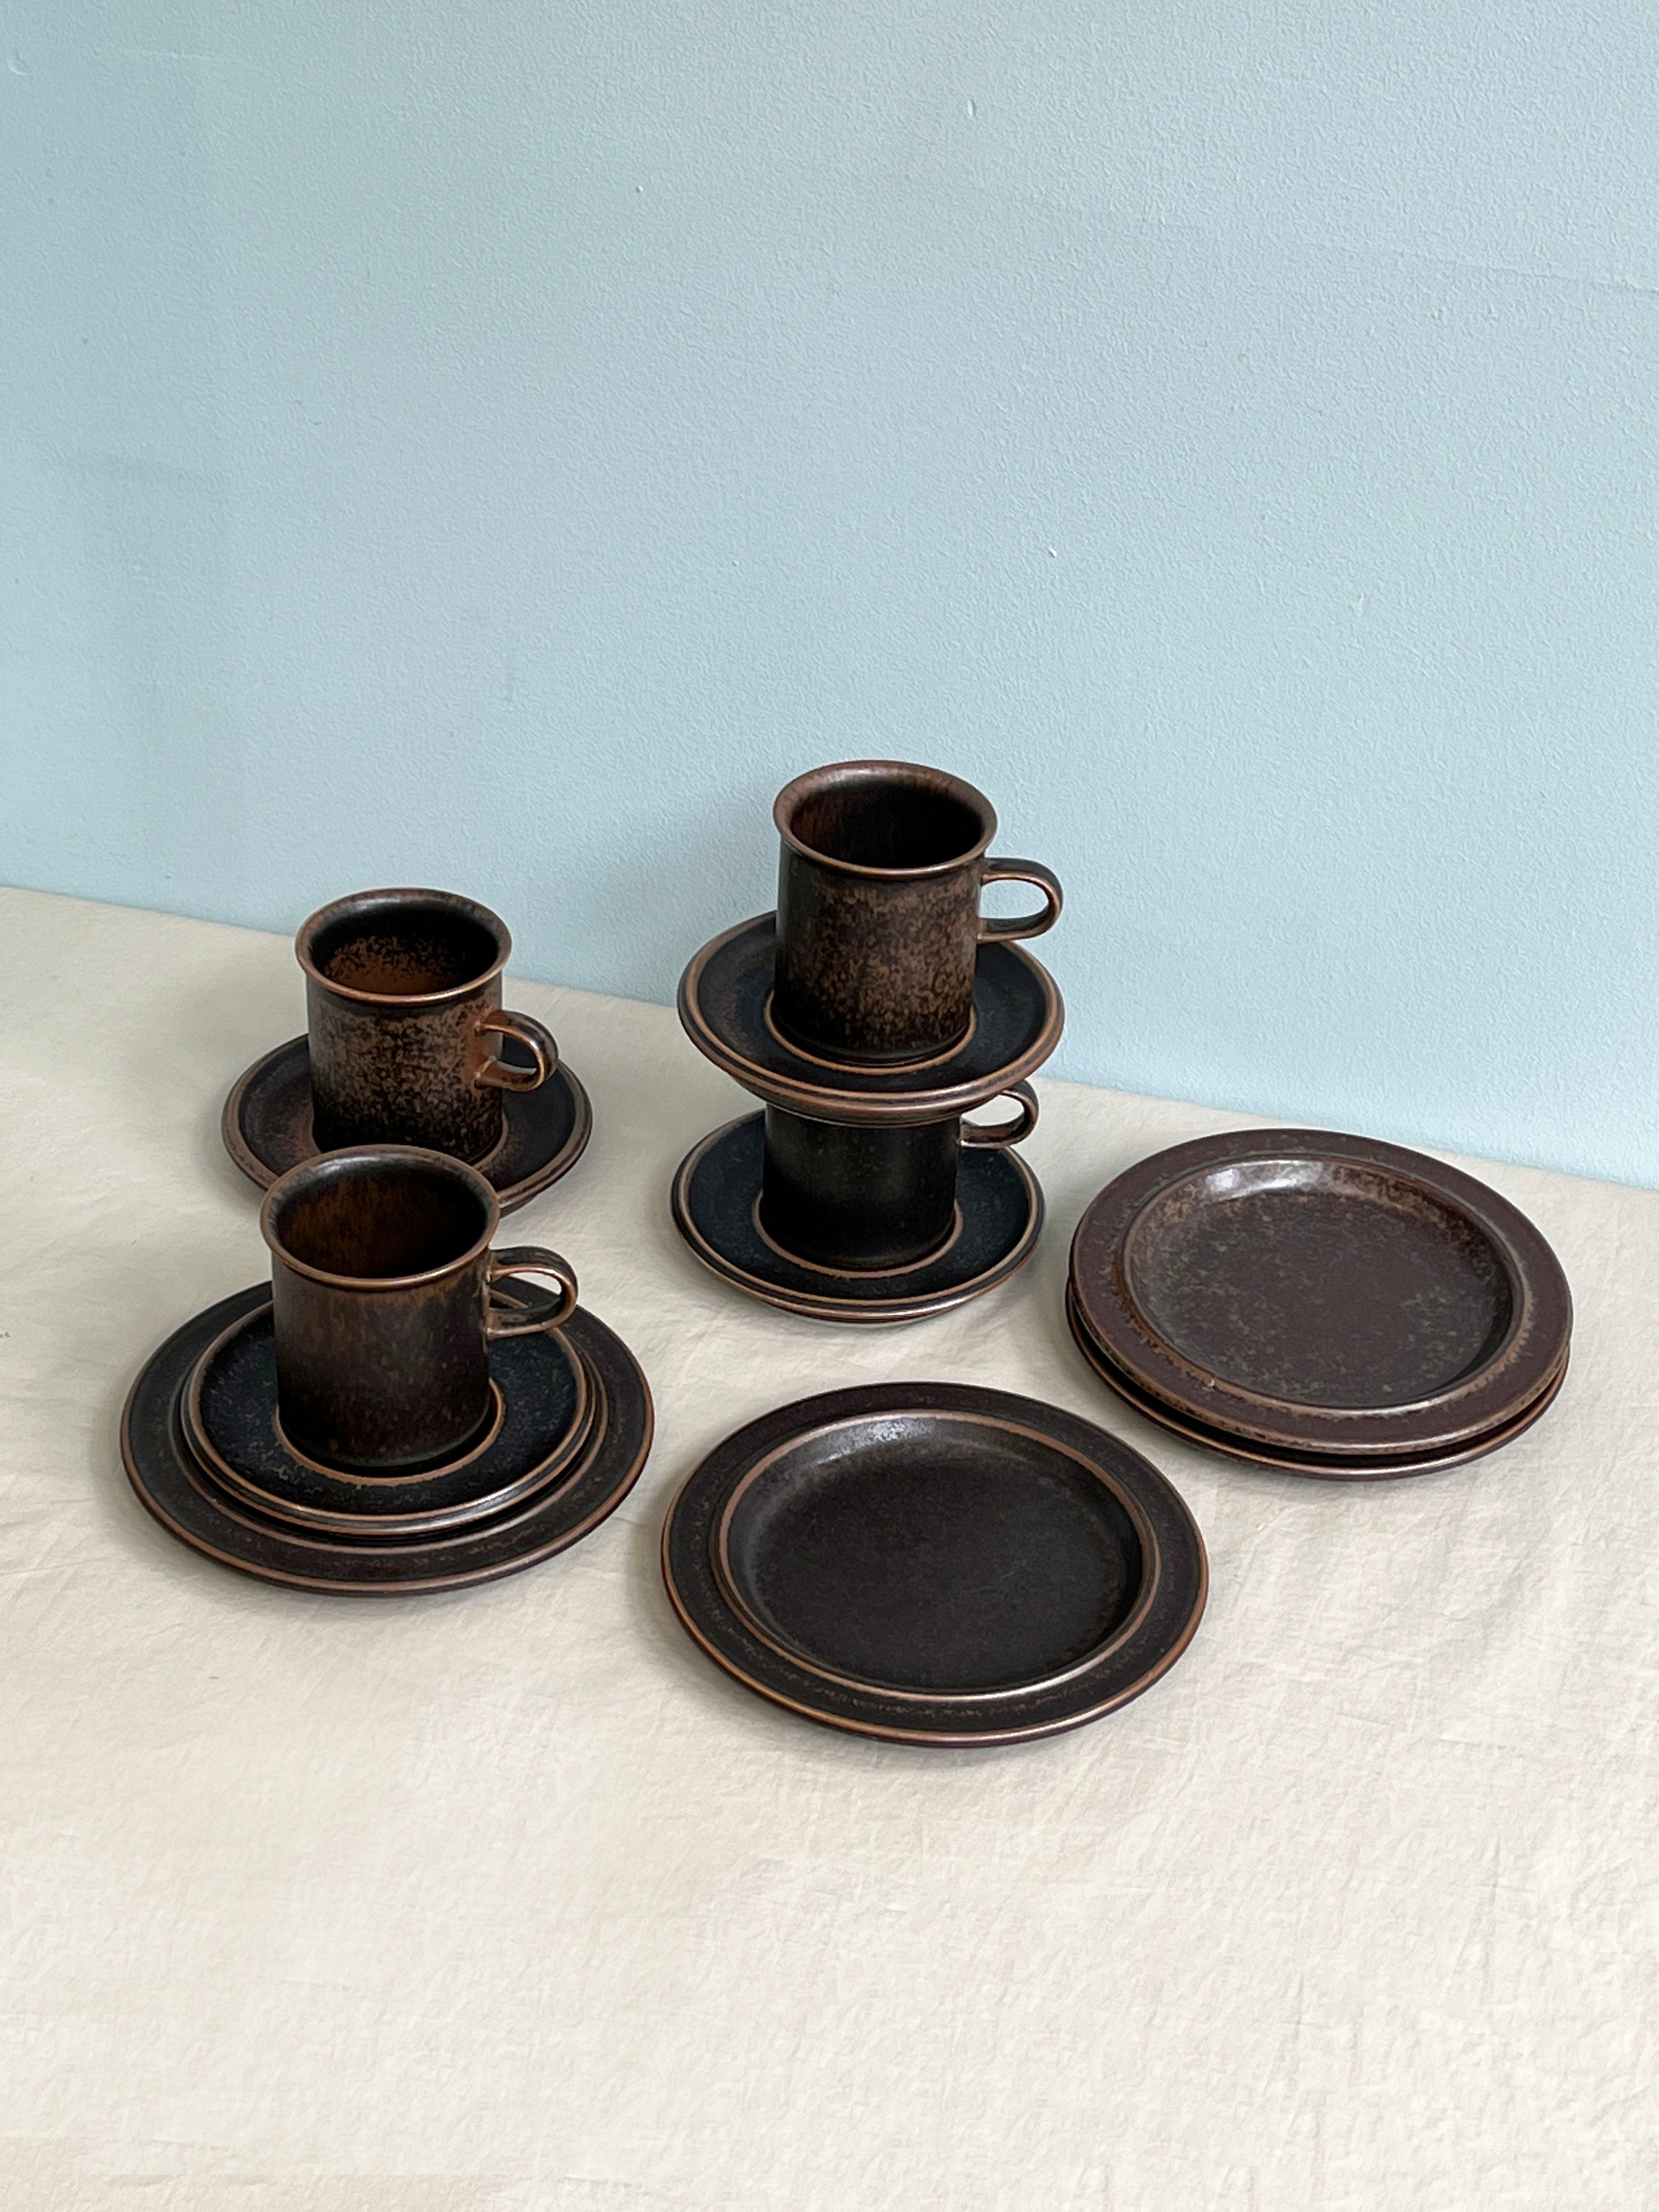 Vintage ARABIA Ruska Coffee Cup and Saucer Plate/アラビア ルスカ コーヒーカップ&ソーサー プレート 北欧ヴィンテージ食器